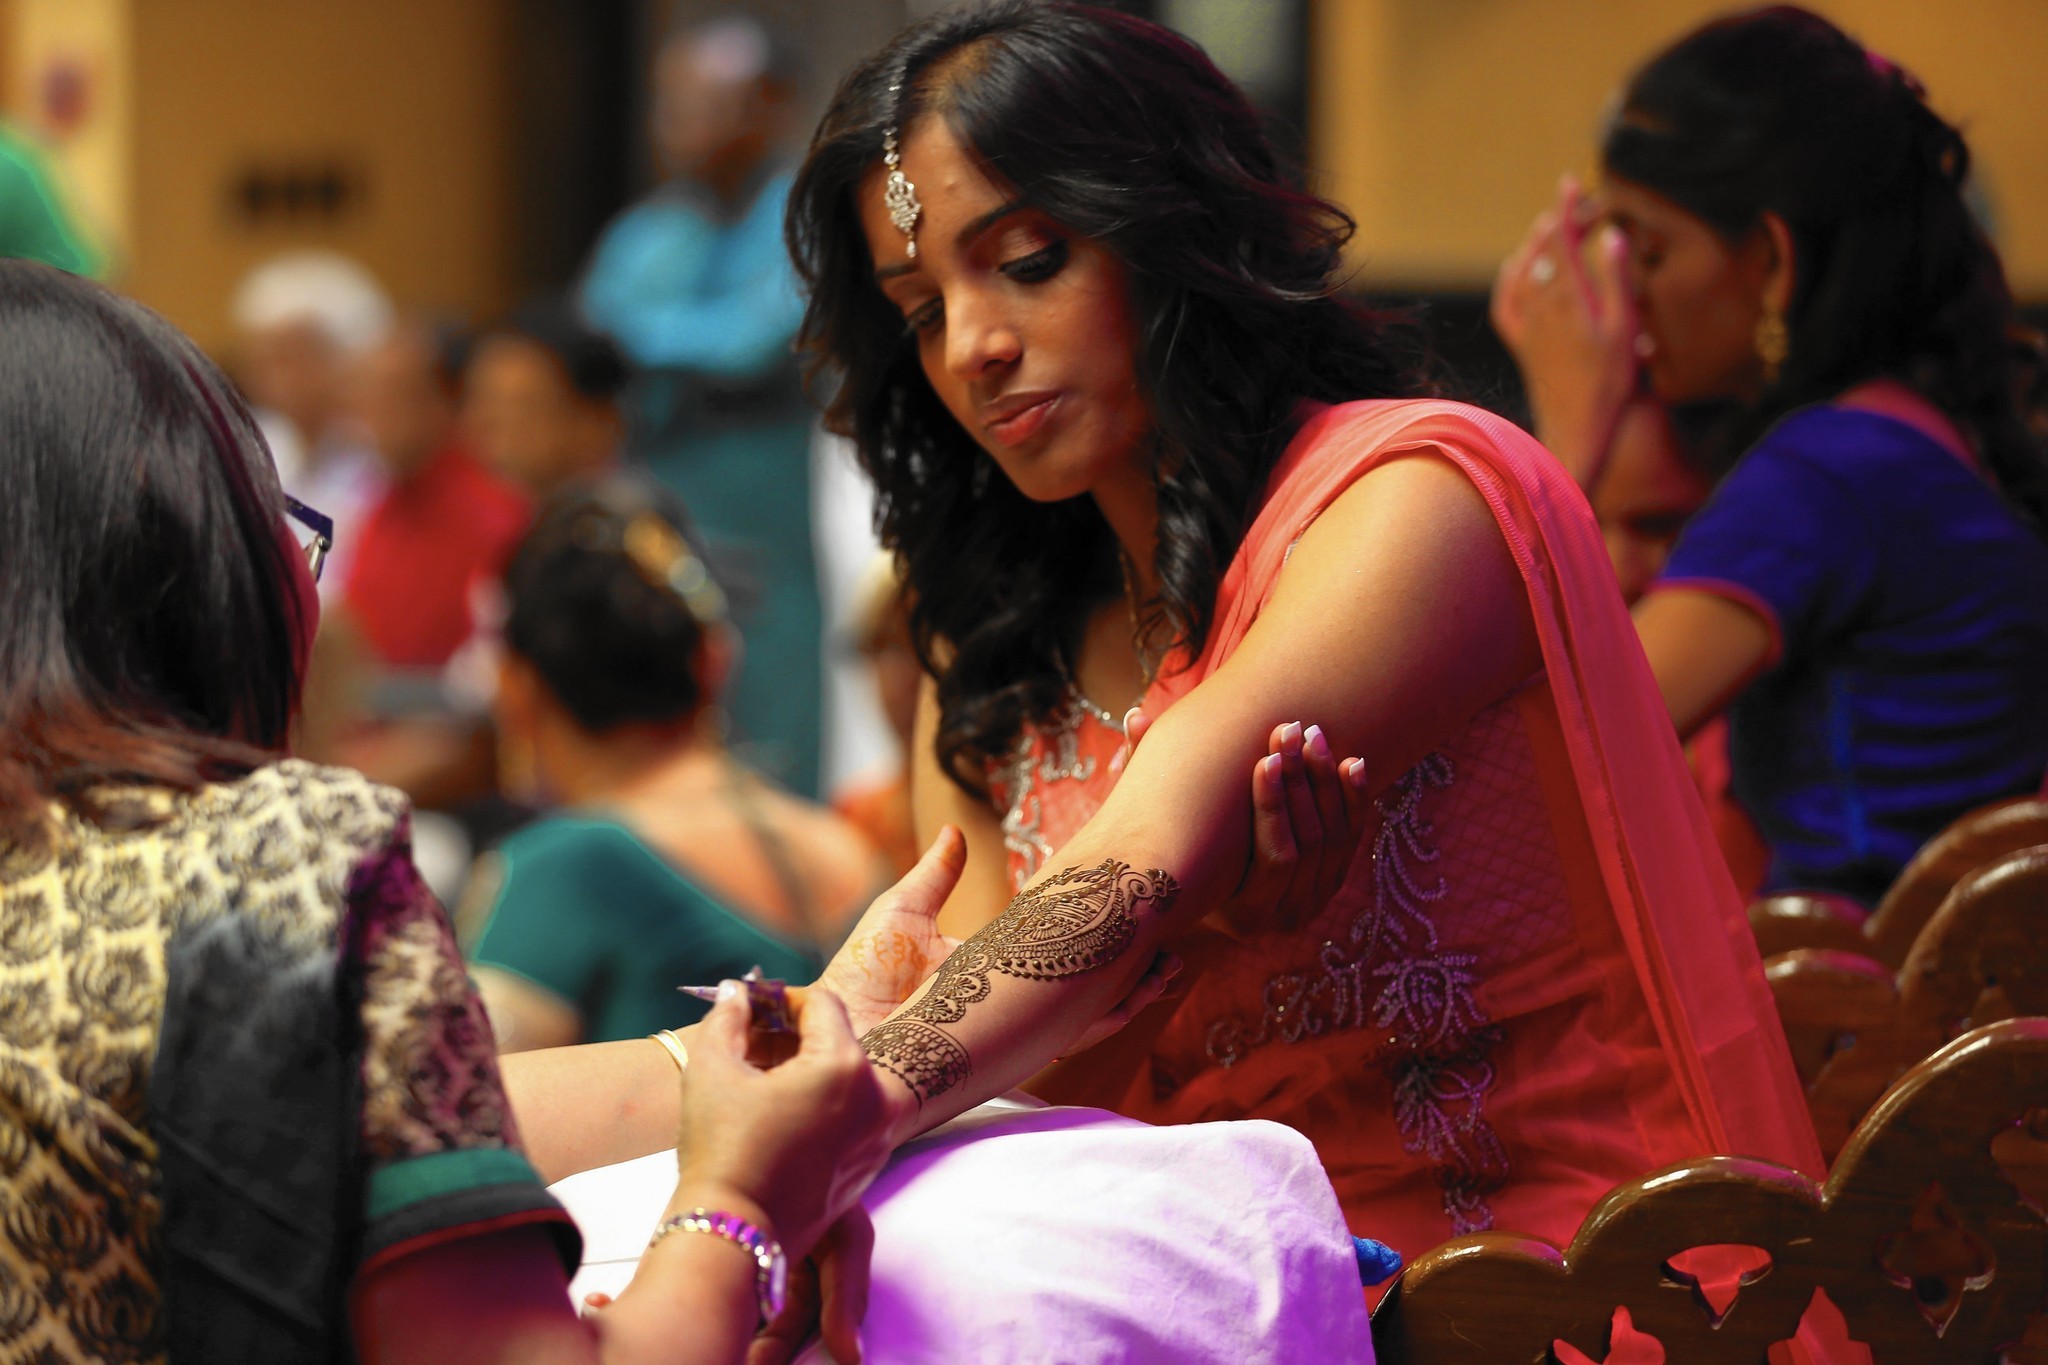 Indian Weddings Are Big Business Chicago Tribune